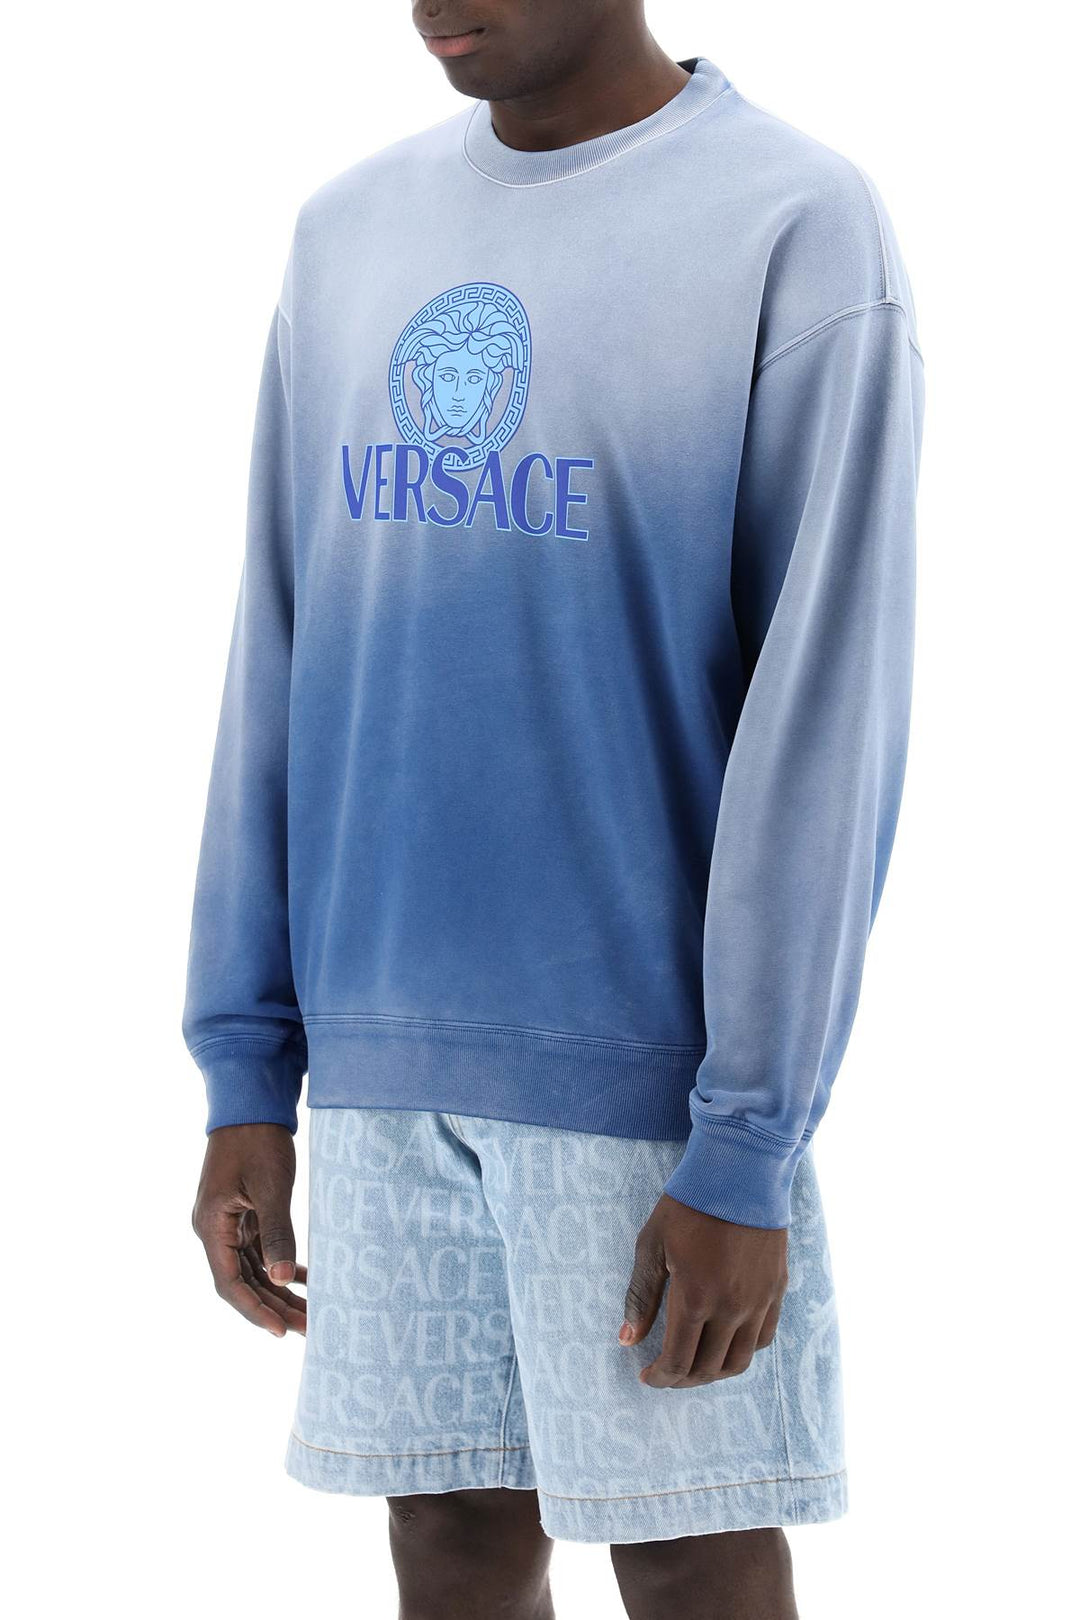 Versace Gradient Medusa Sweatshirt   Blue